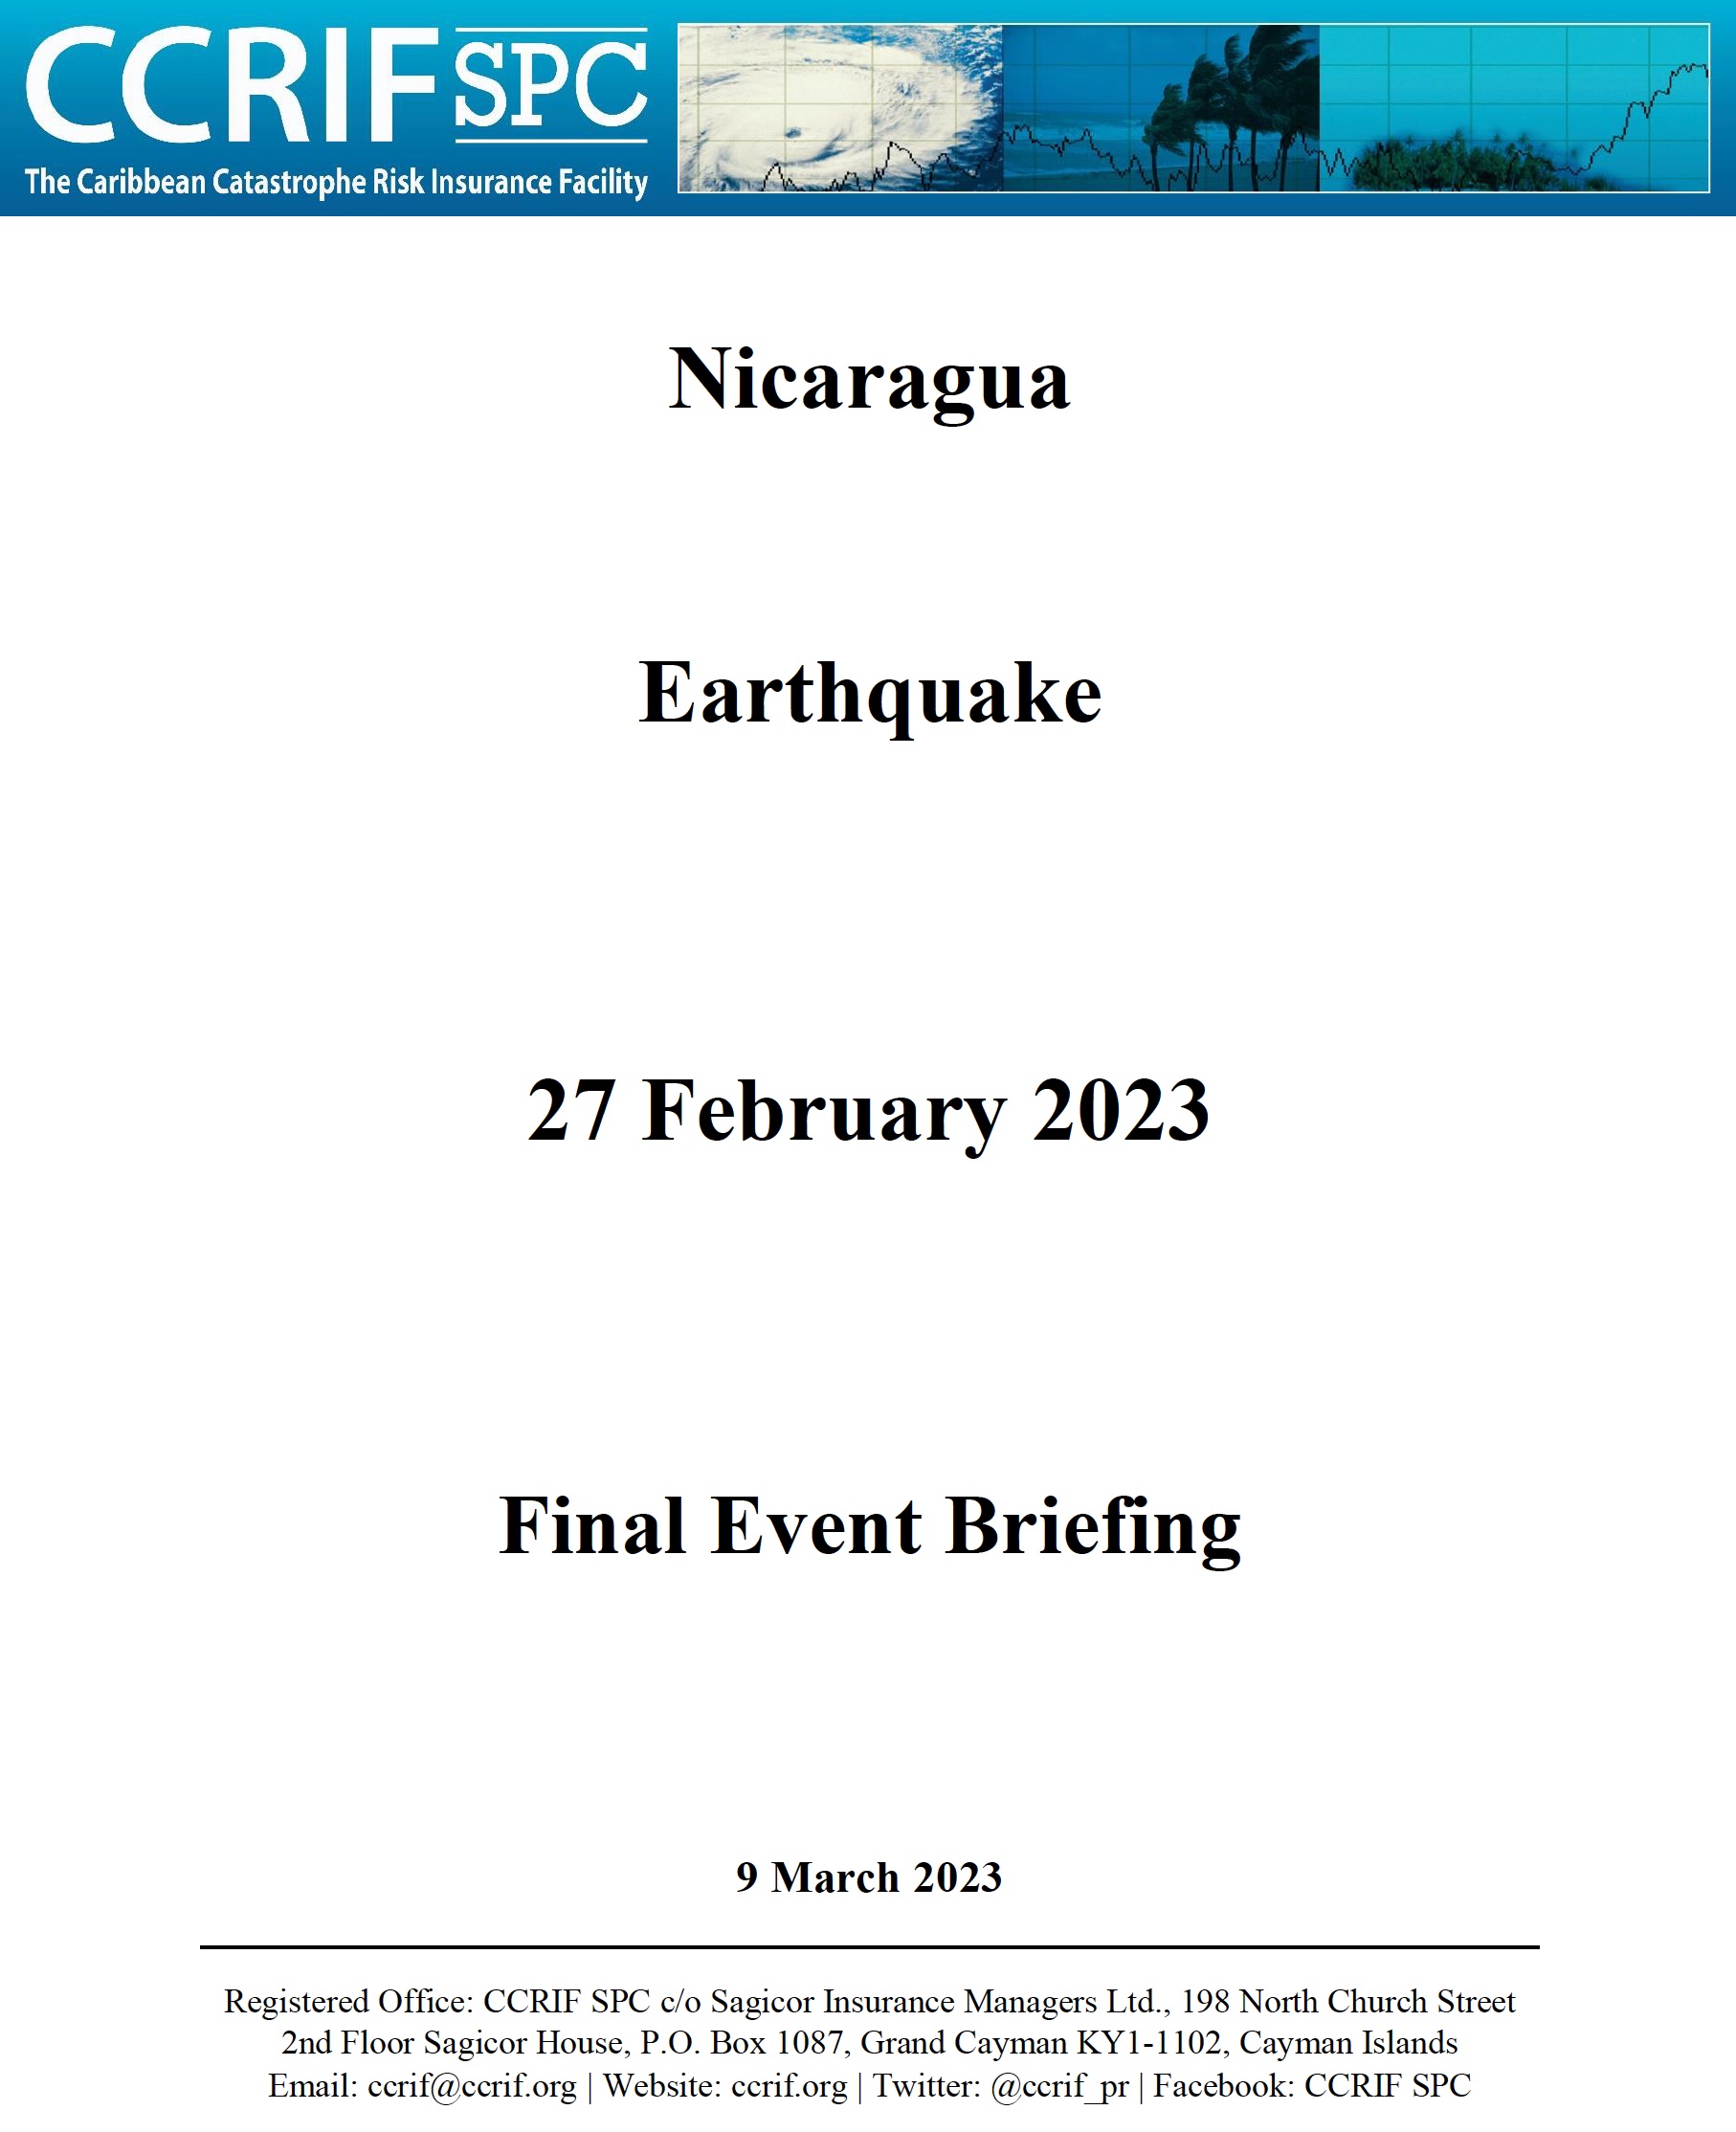 Final Event Briefing - Earthquake - Nicaragua - February 27 2023